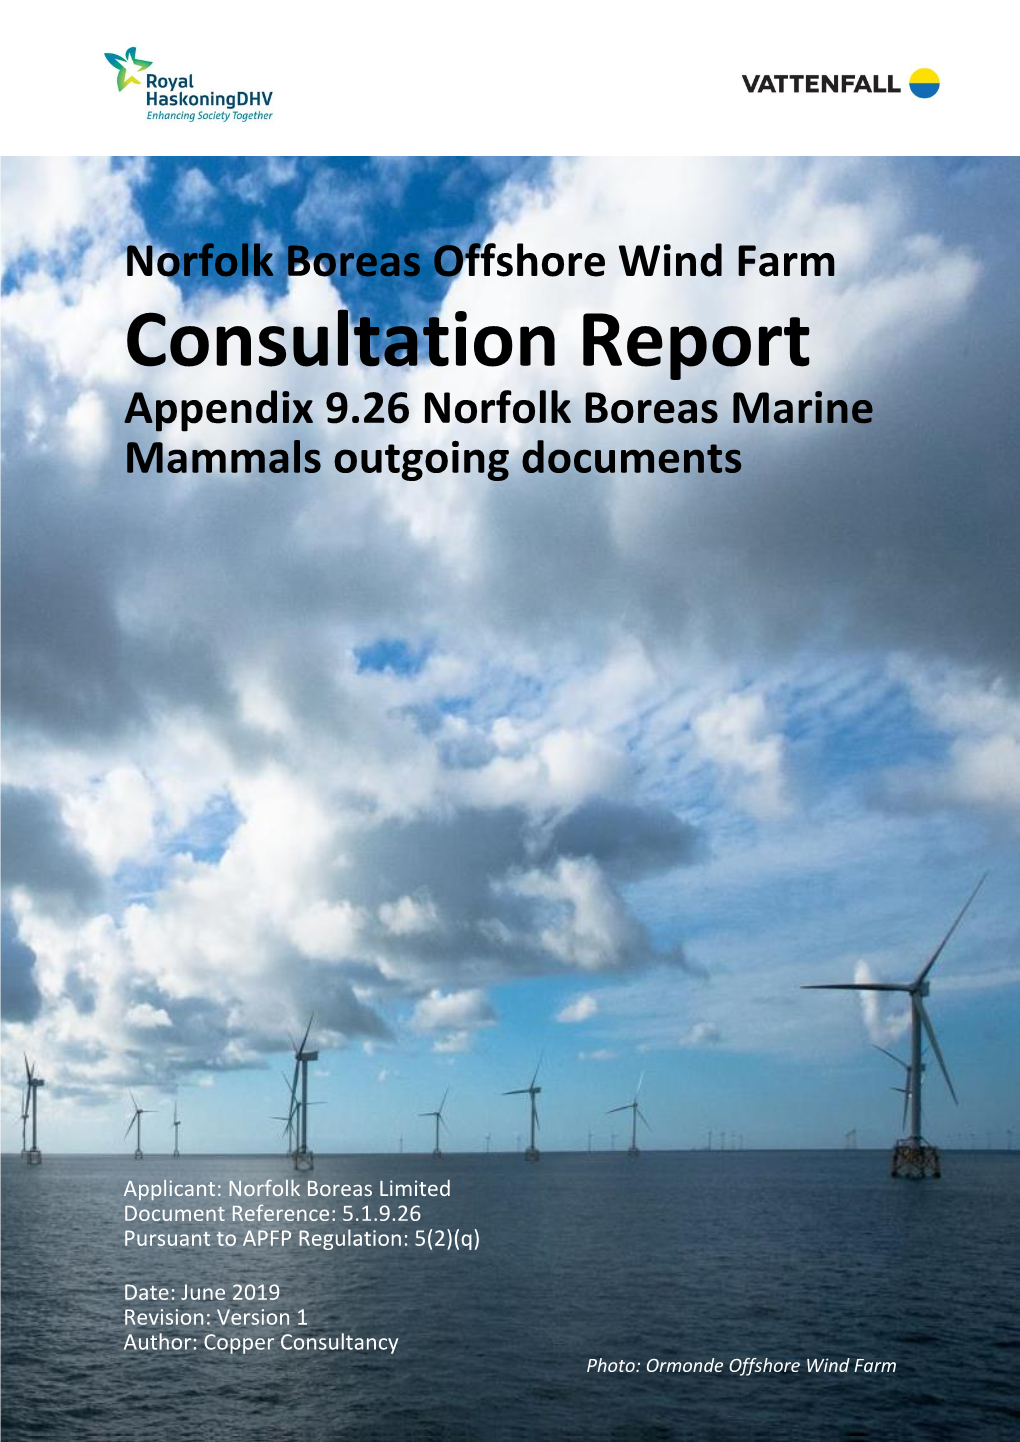 Consultation Report Appendix 9.26 Norfolk Boreas Marine Mammals Outgoing Documents